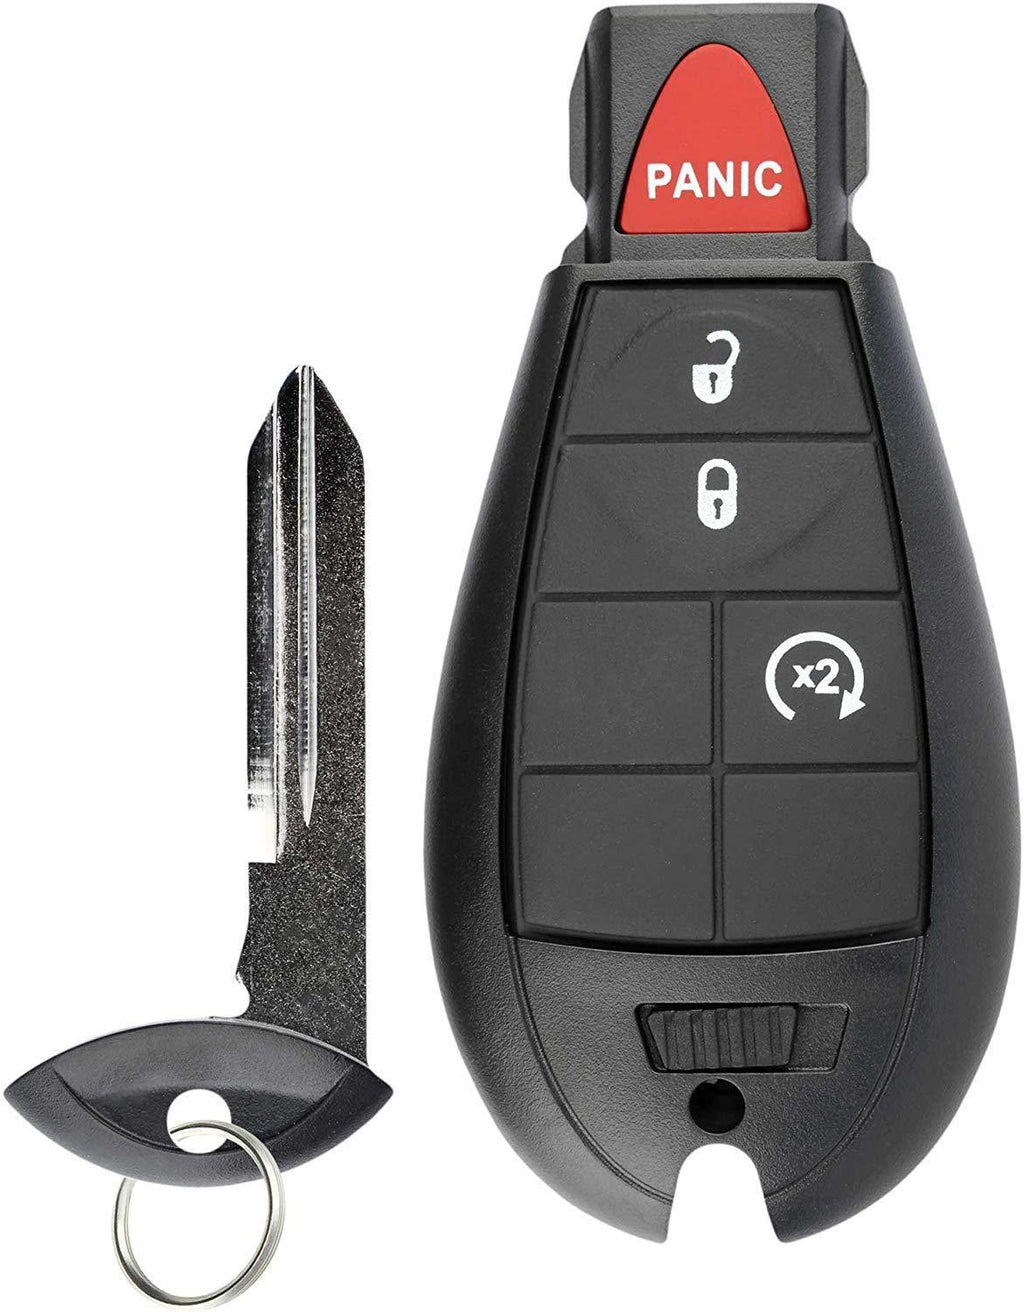  [AUSTRALIA] - KeylessOption Keyless Entry Remote Car Key Fob Alarm for Ram 1500, 2500, 3500 GQ4-53T